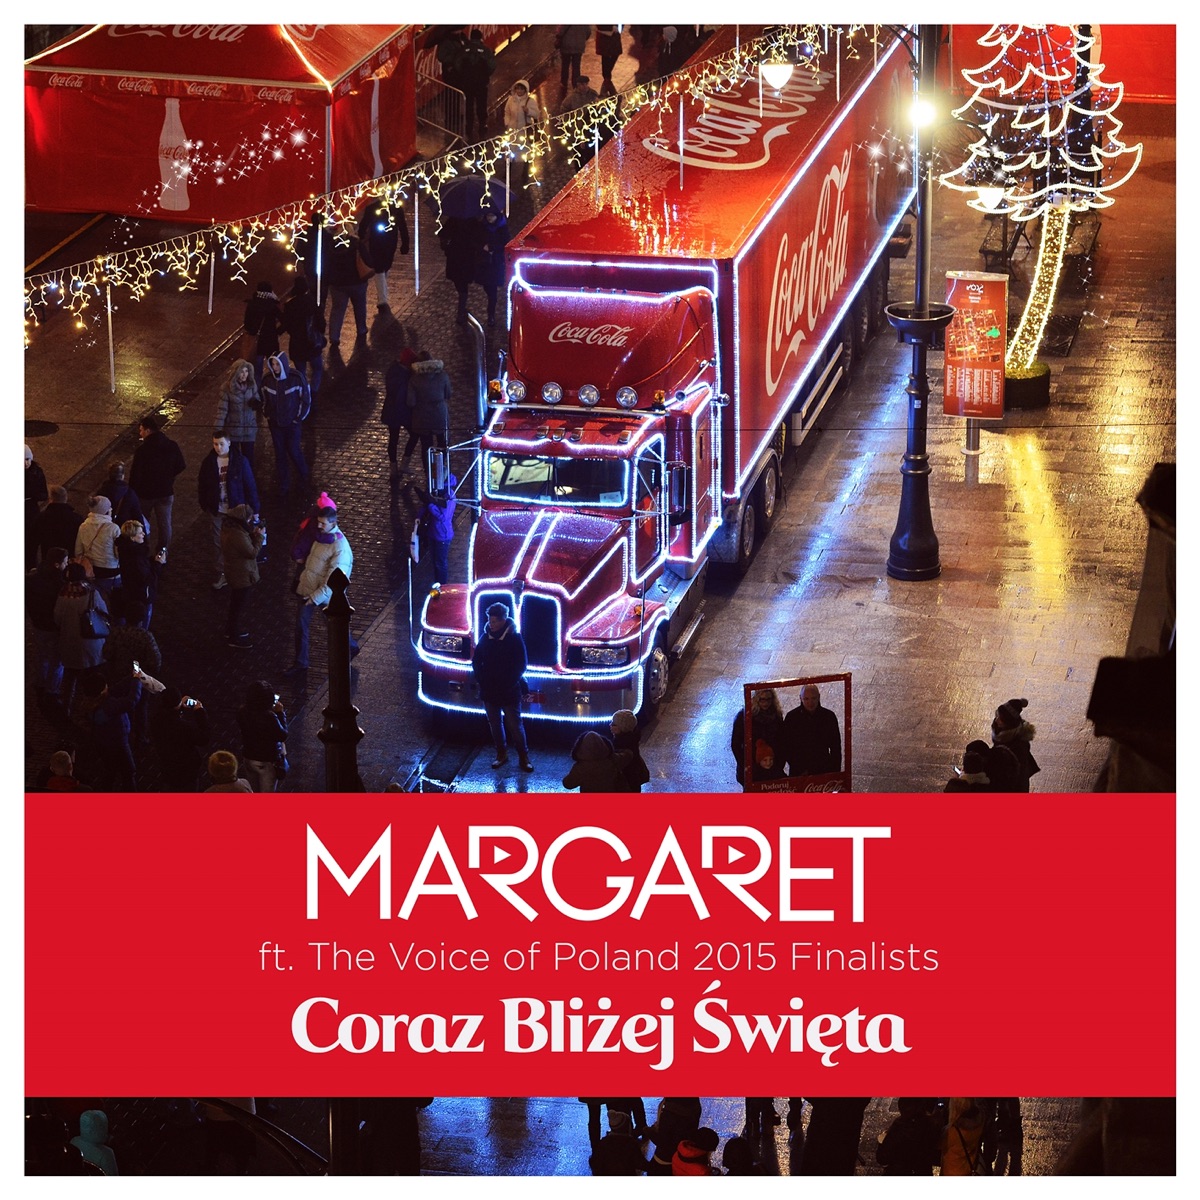 Margaret featuring The Voice Of Poland 2015 Finalists — Coraz bliżej święta cover artwork